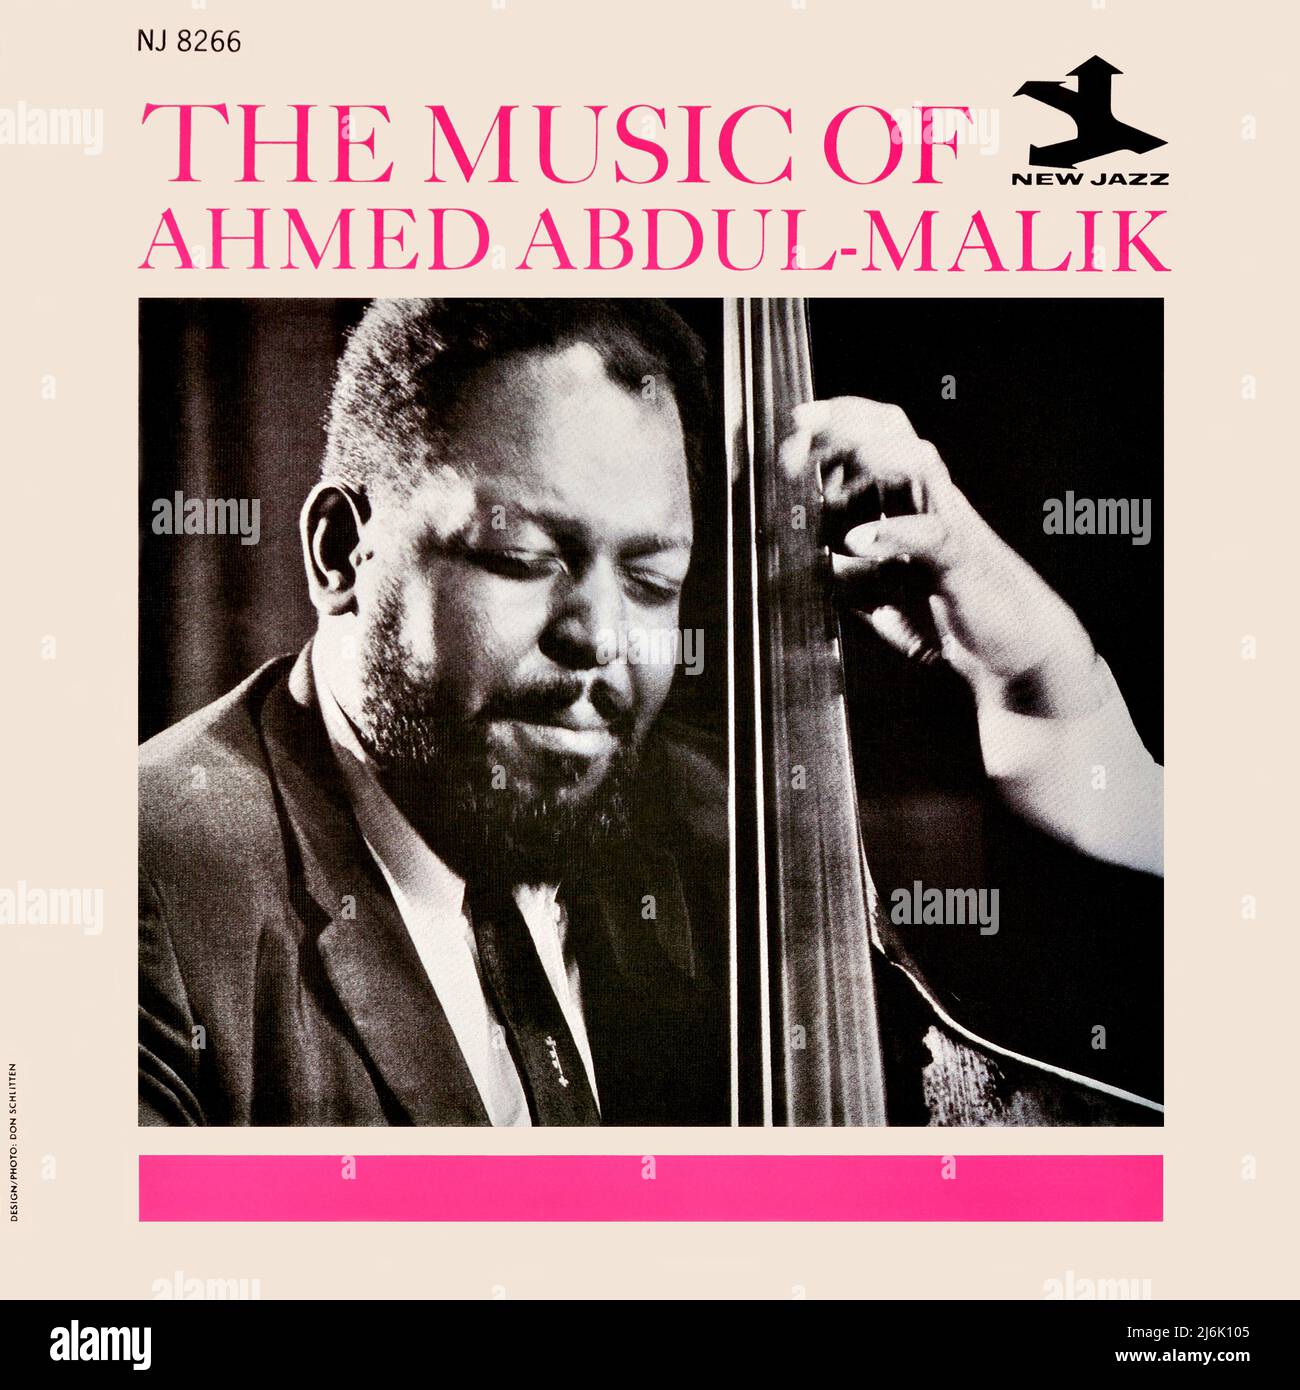 Ahmed Abdul-Malik - copertina originale dell'album in vinile - The Music of Ahmed Abdul-Malik - 1961 Foto Stock